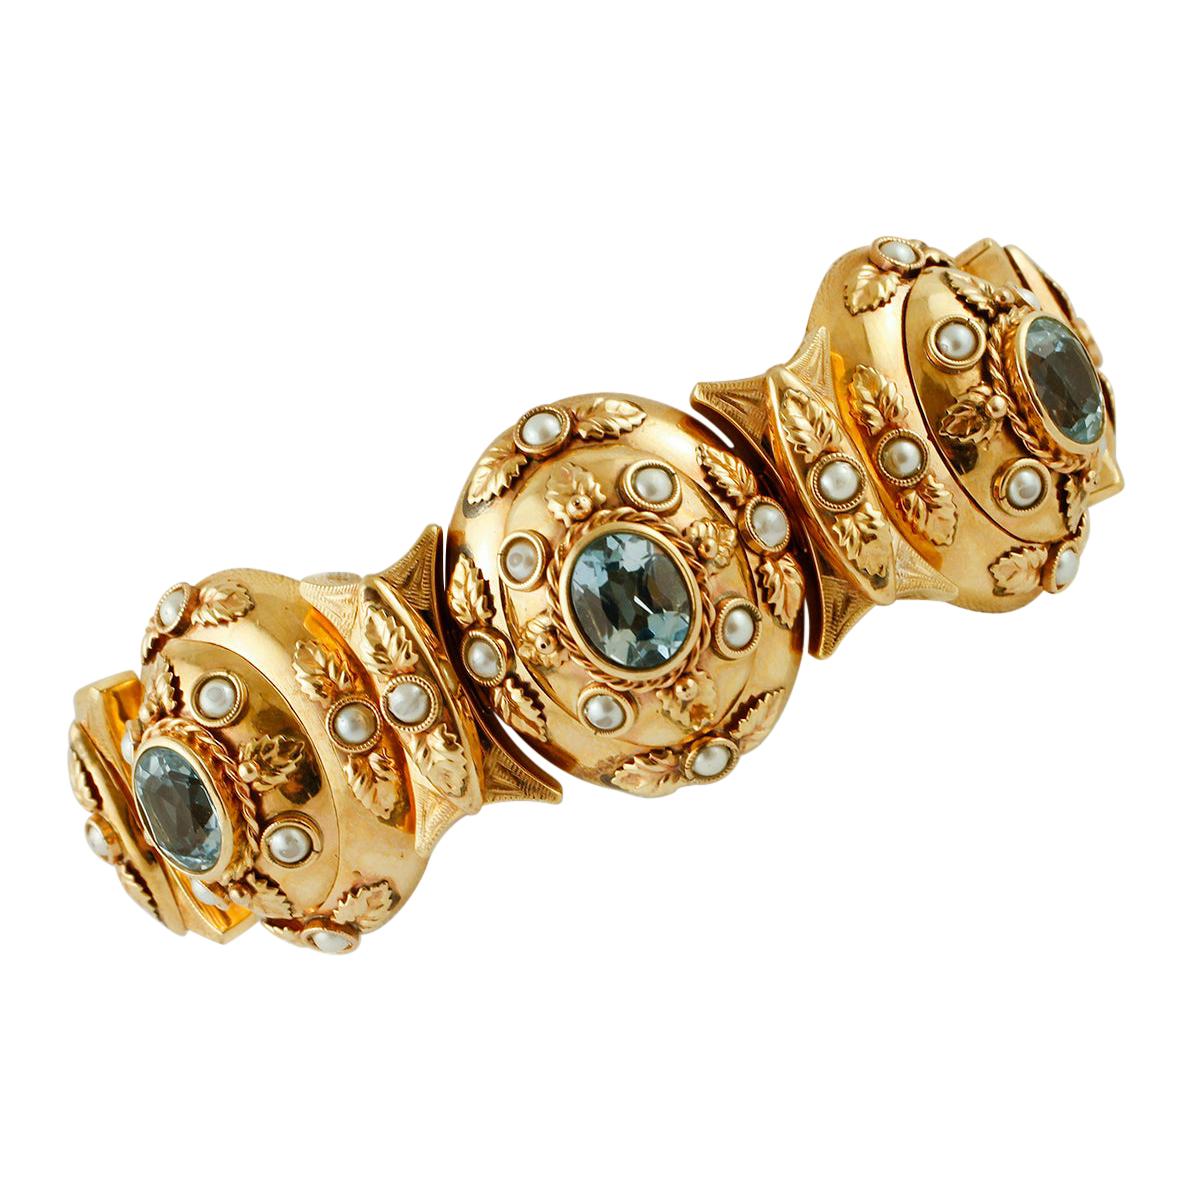 Light Blue Topaz, Pearls, 14 Karat Rose Gold 1950s Bracelet